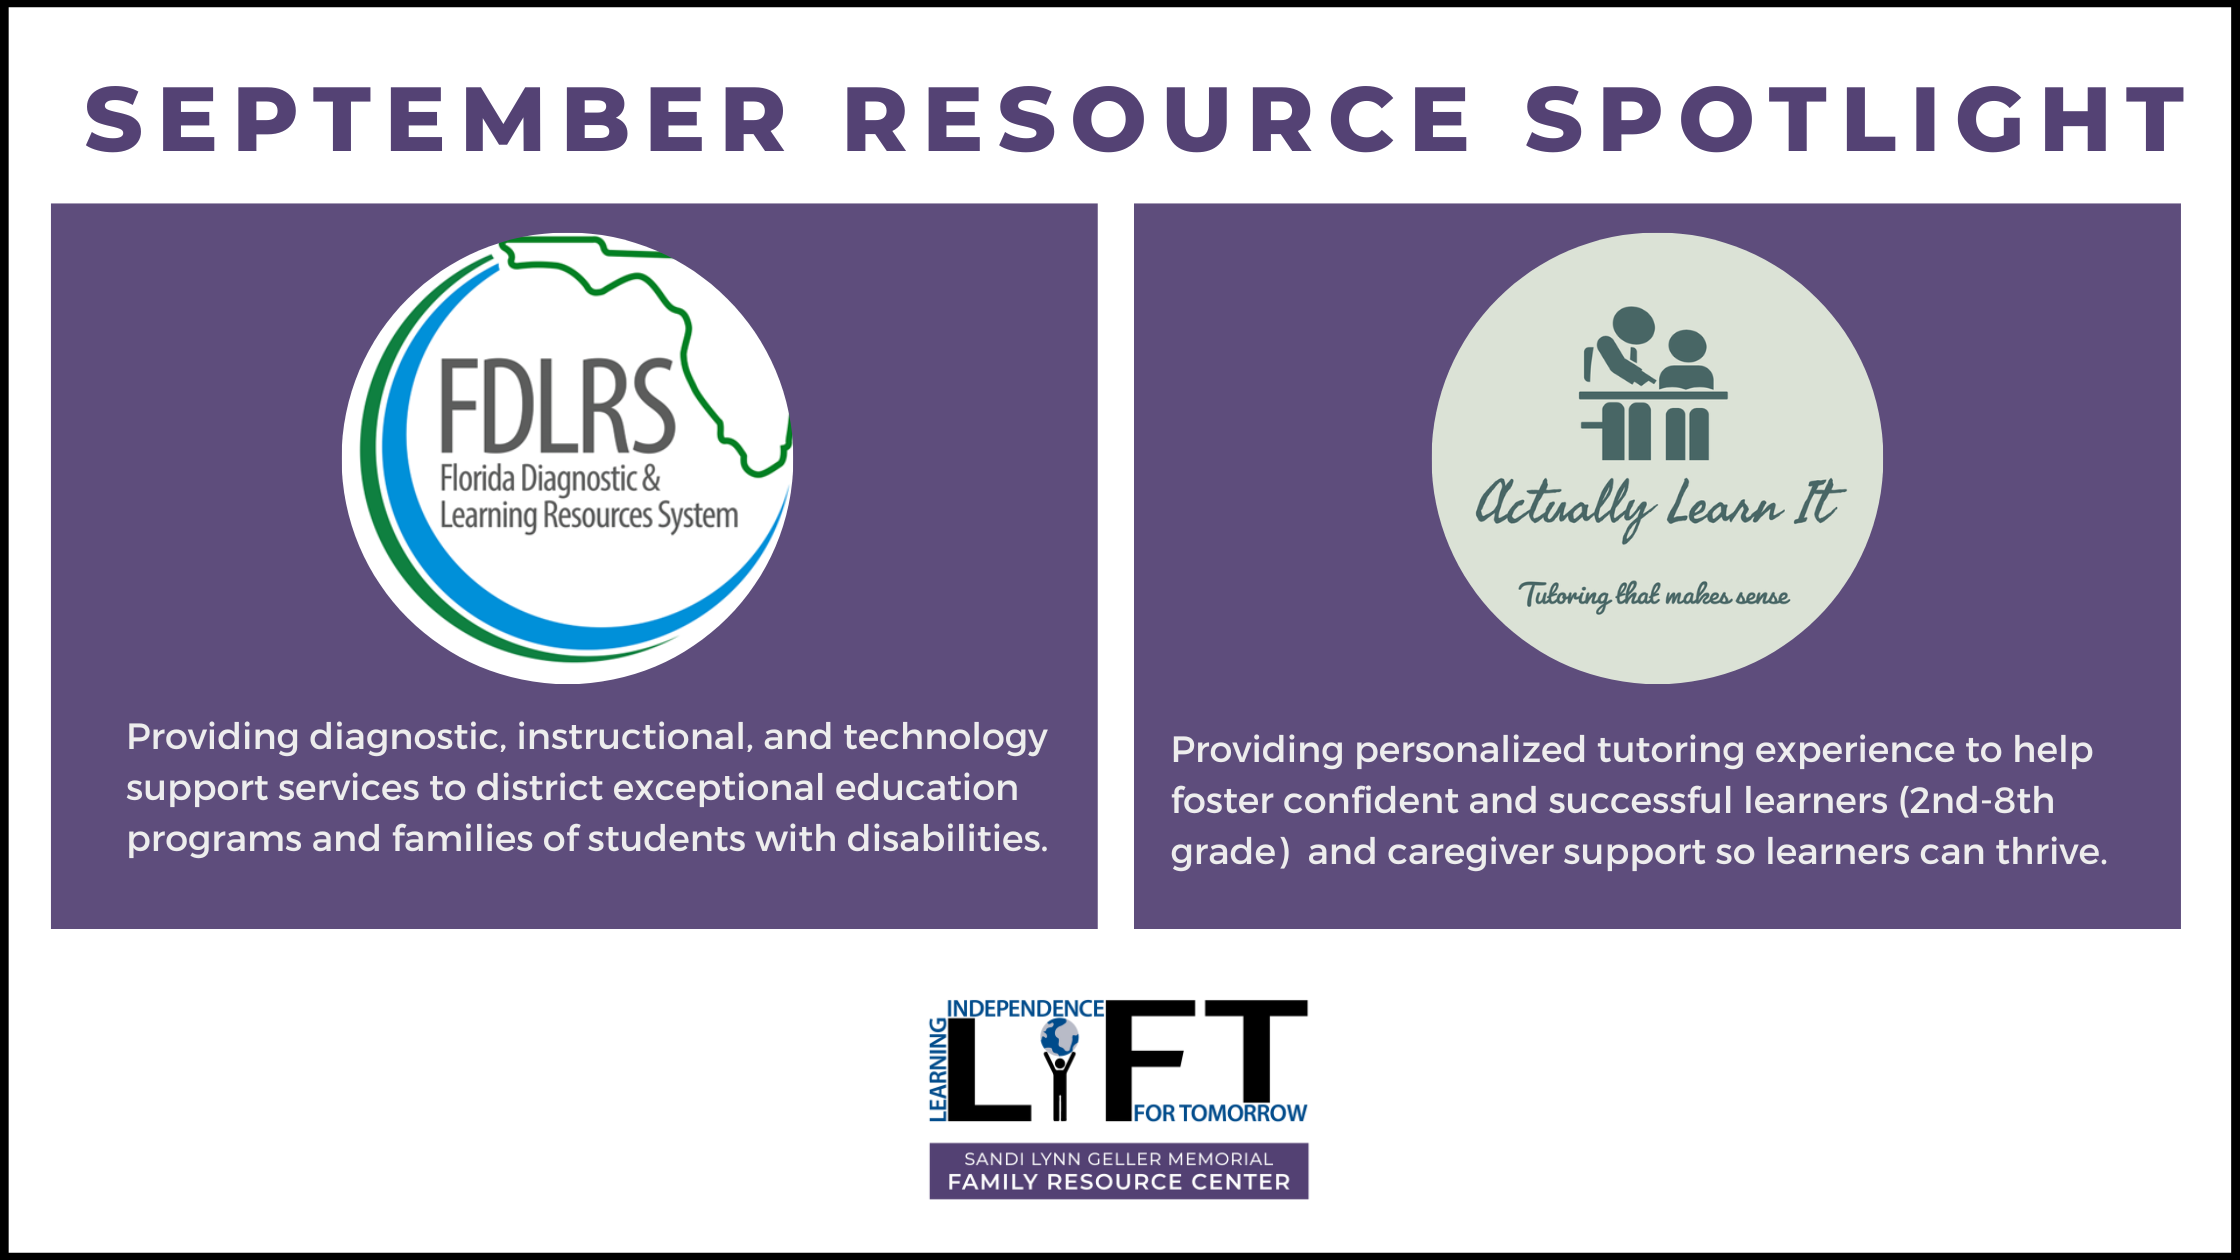 September Resource Spotlight: FDLRS & Actually Learn It